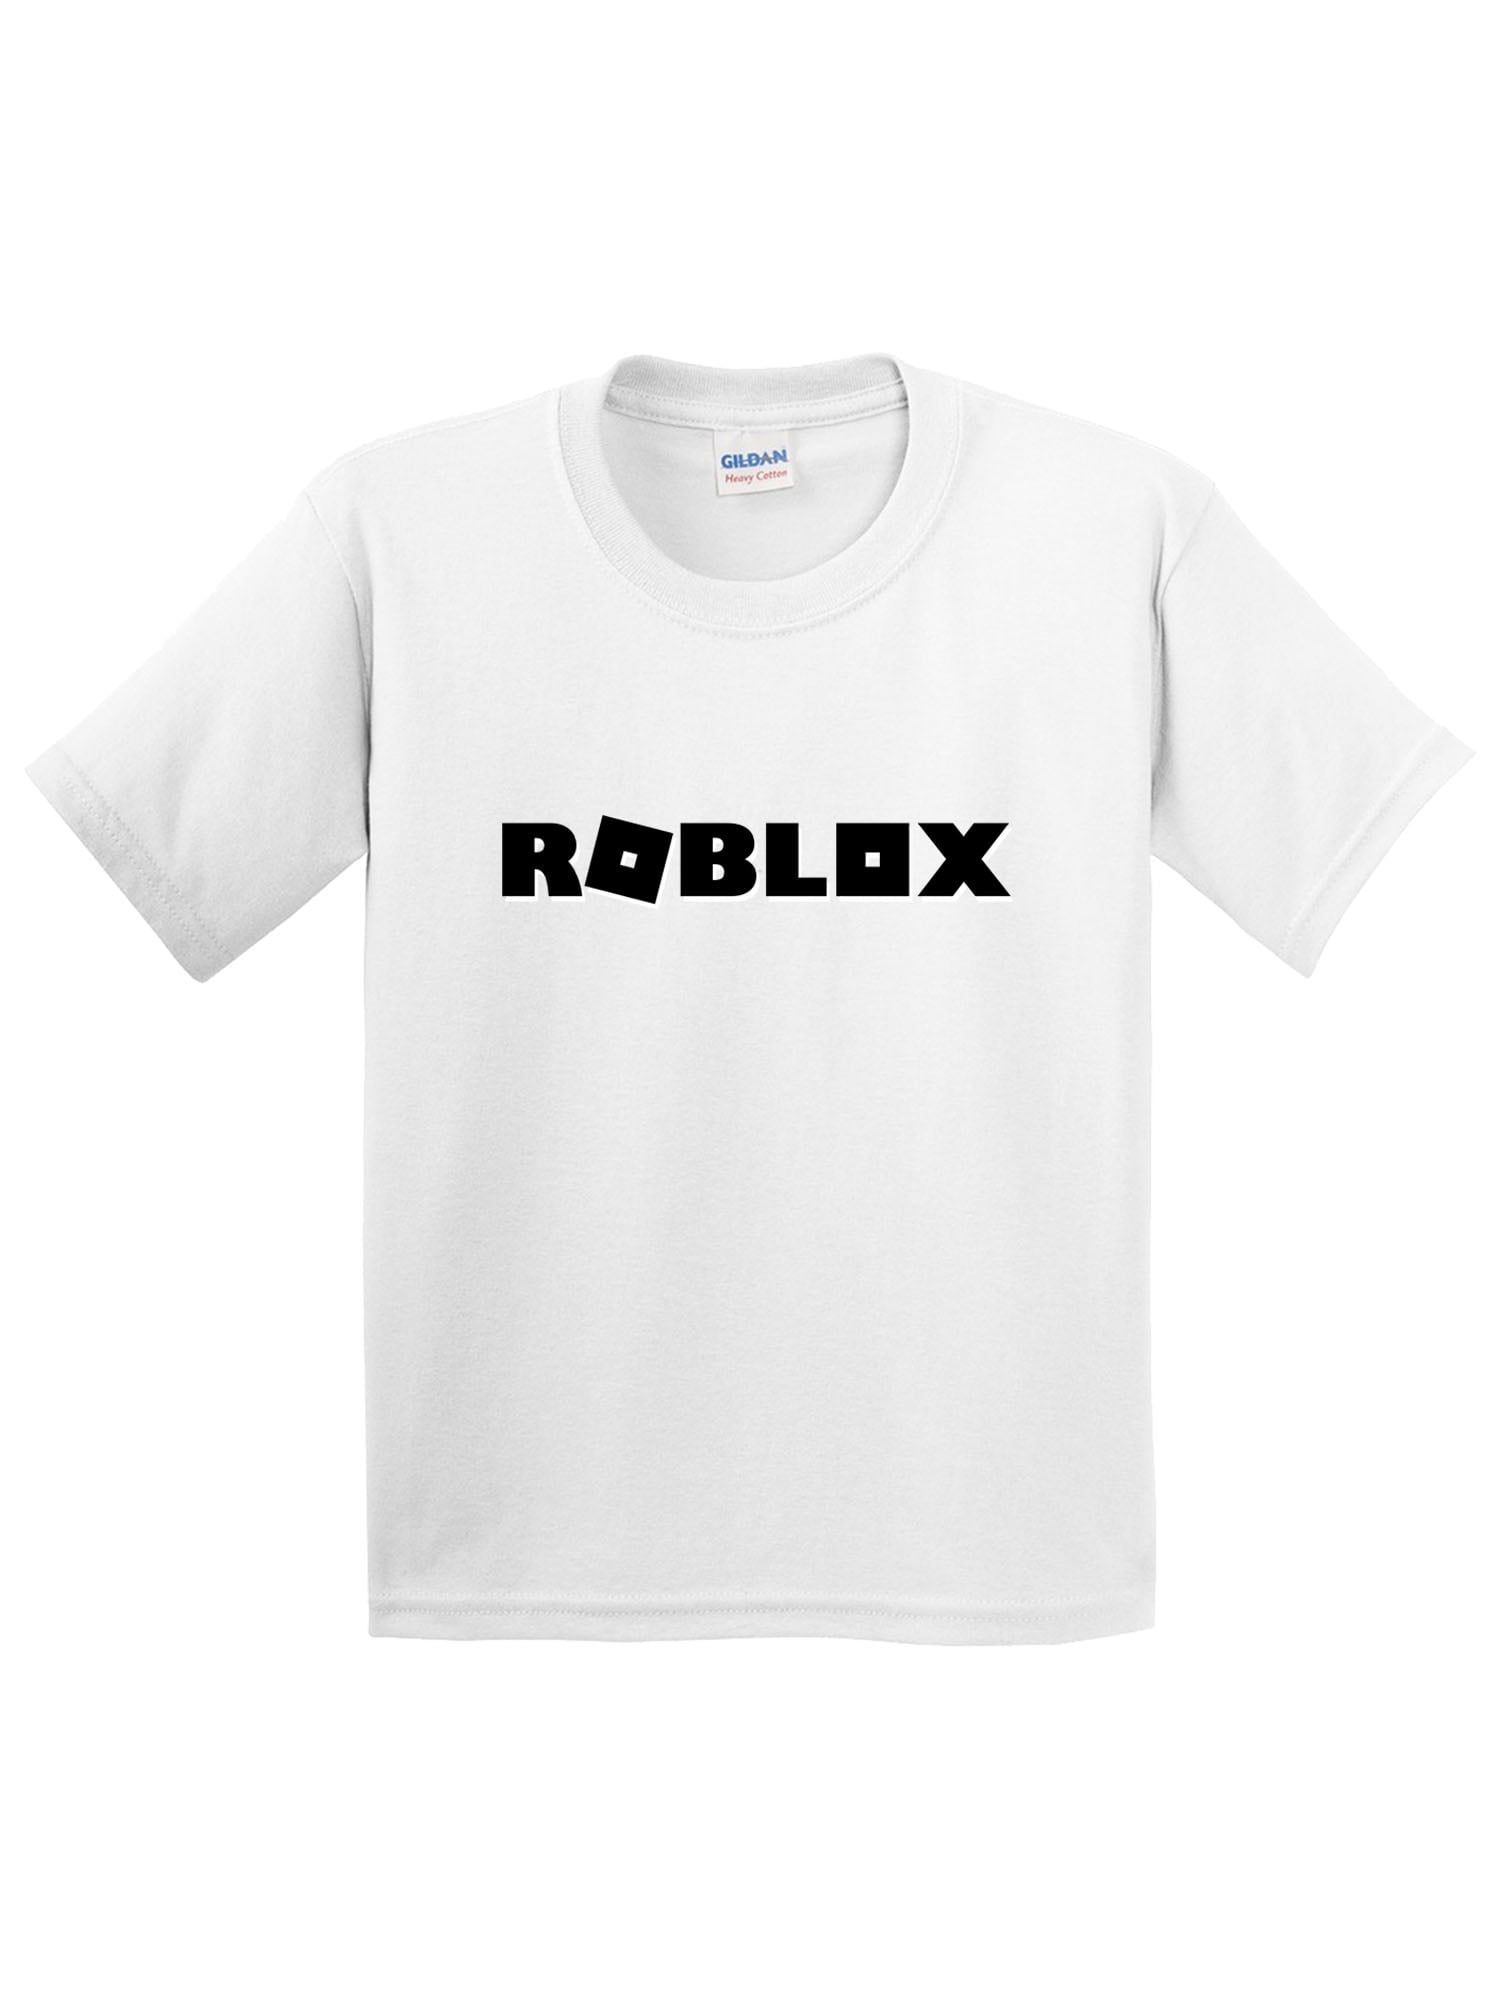 Roblox Guitar Tee T Shirt